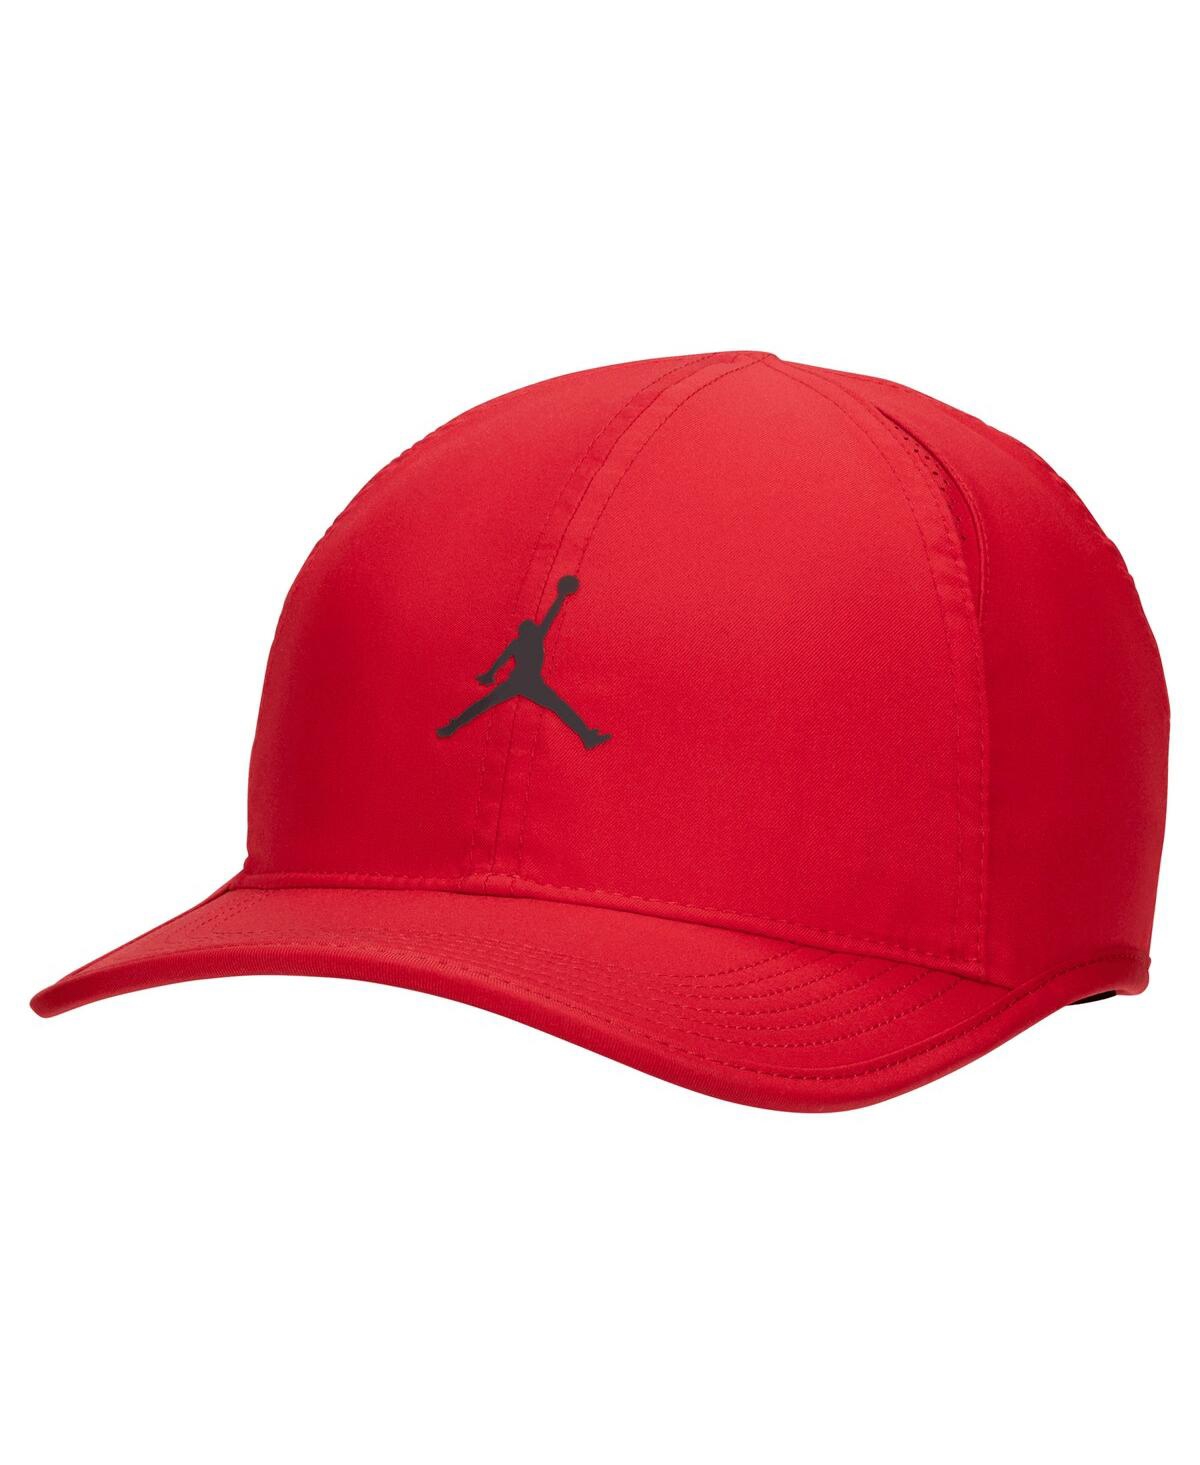 Jorand Men's Club Performance Adjustable Hat - Red